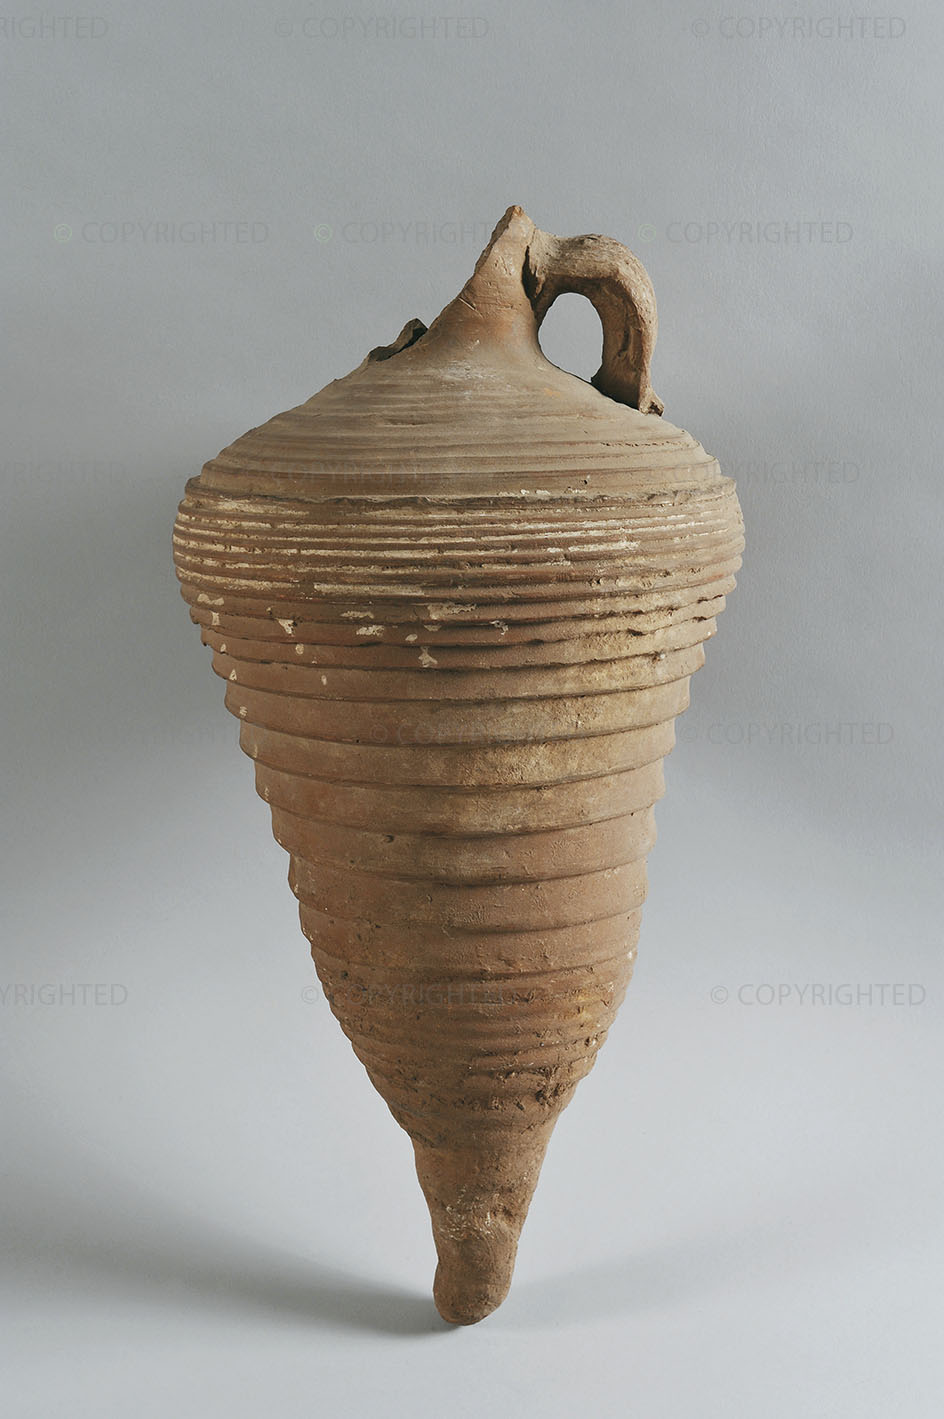 Fragmentary amphora